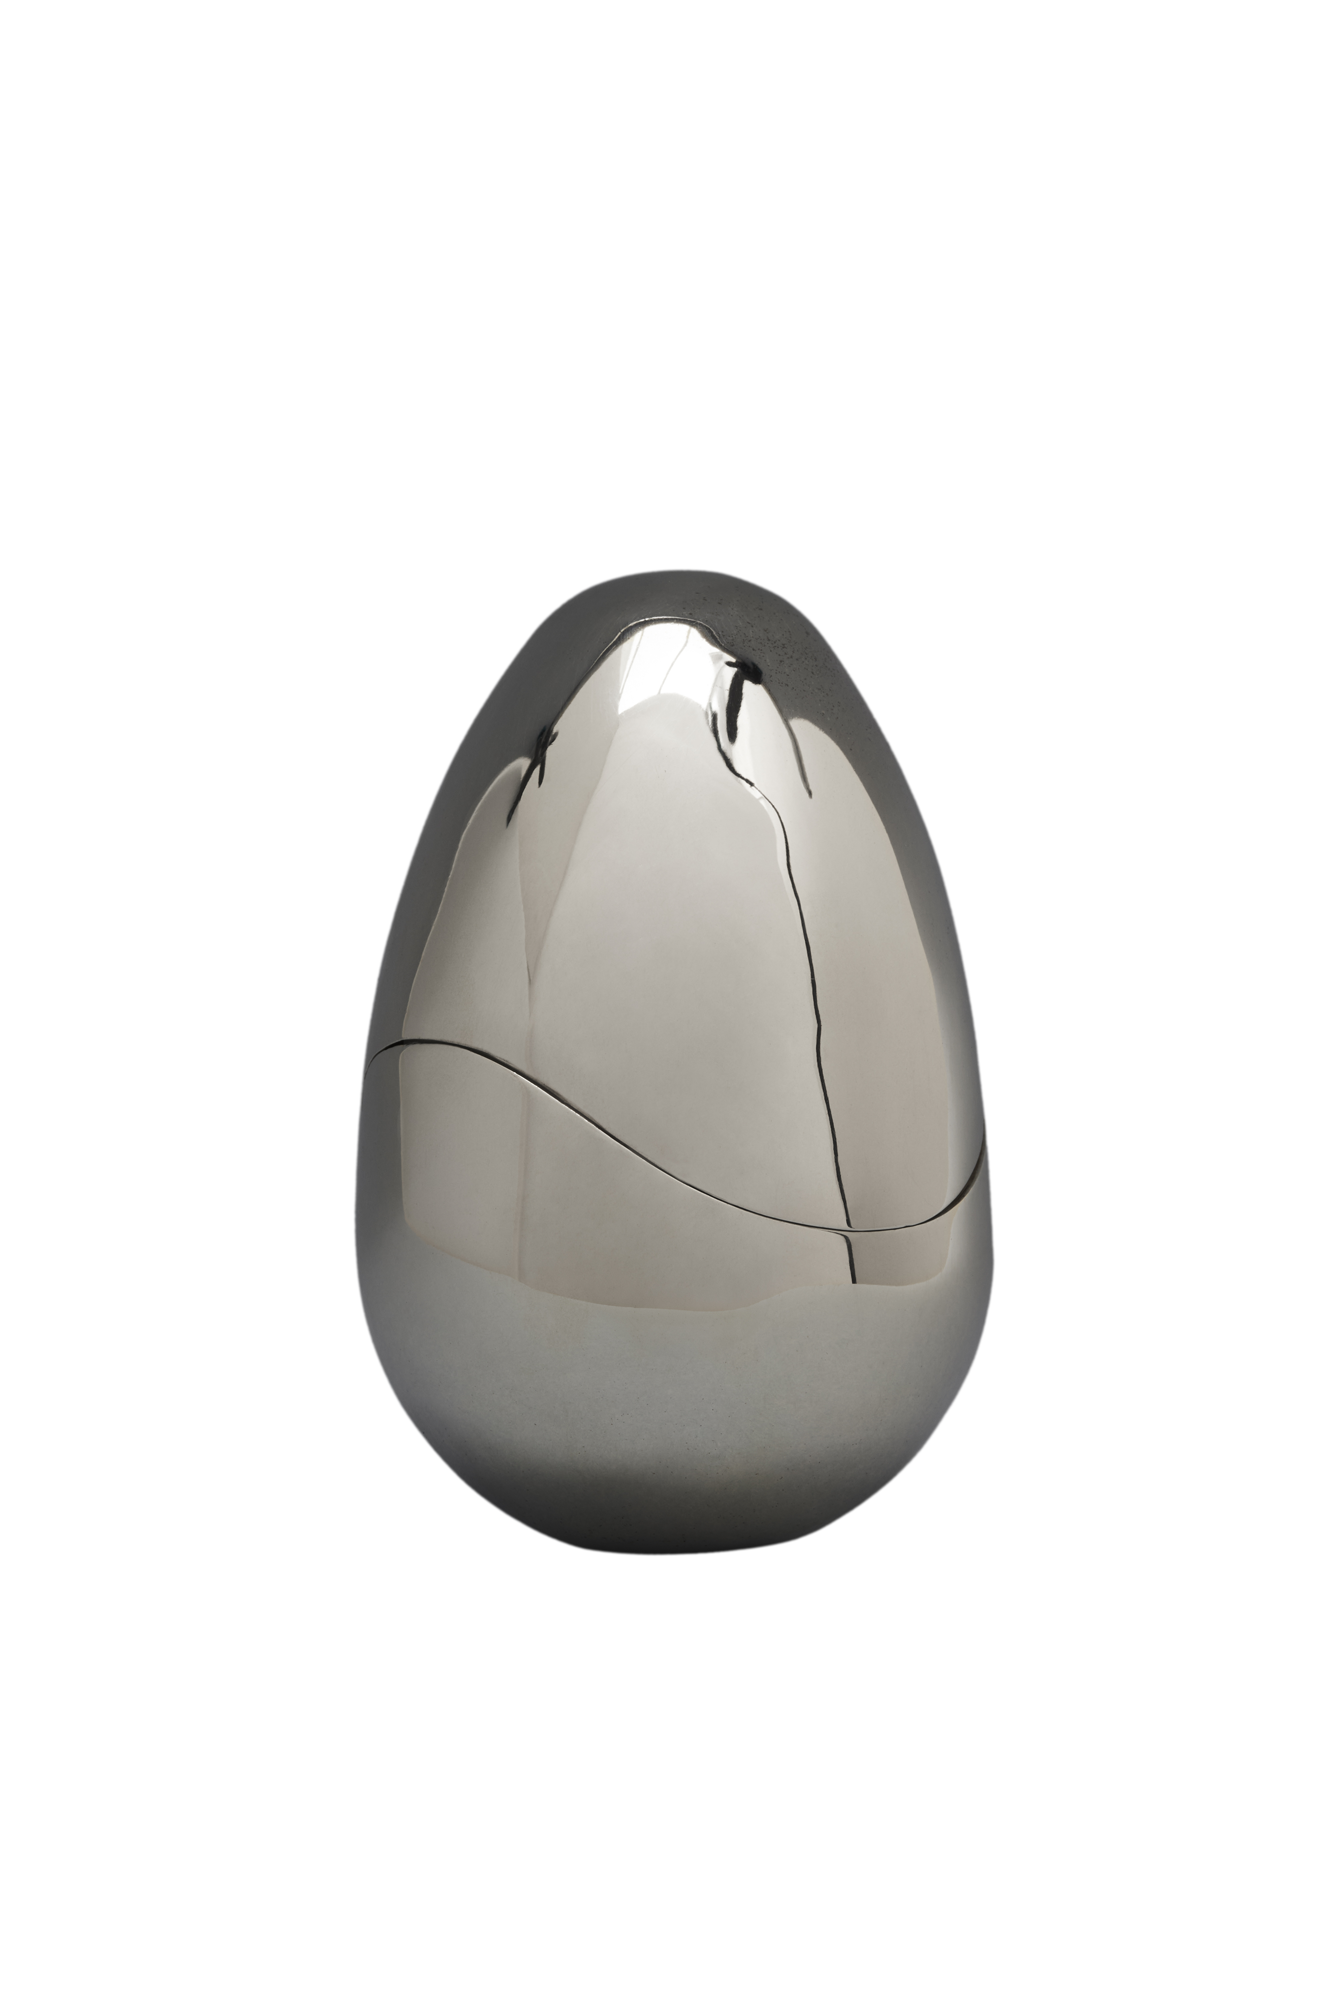 the egg cutie de argint